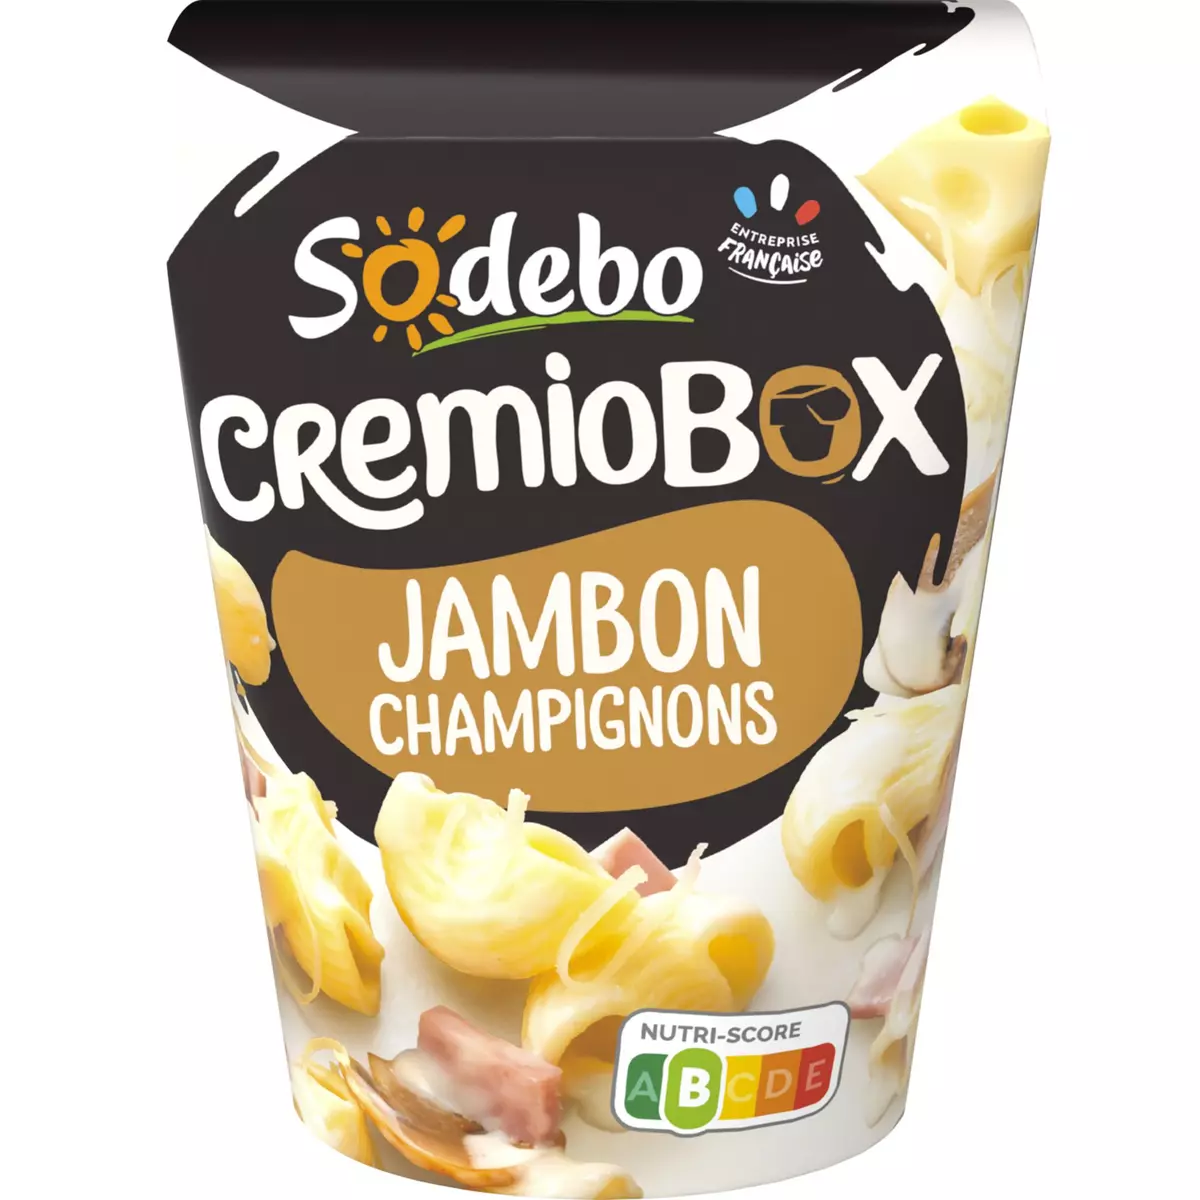 SODEBO Cremio box jambon champignons 1 portion 280g